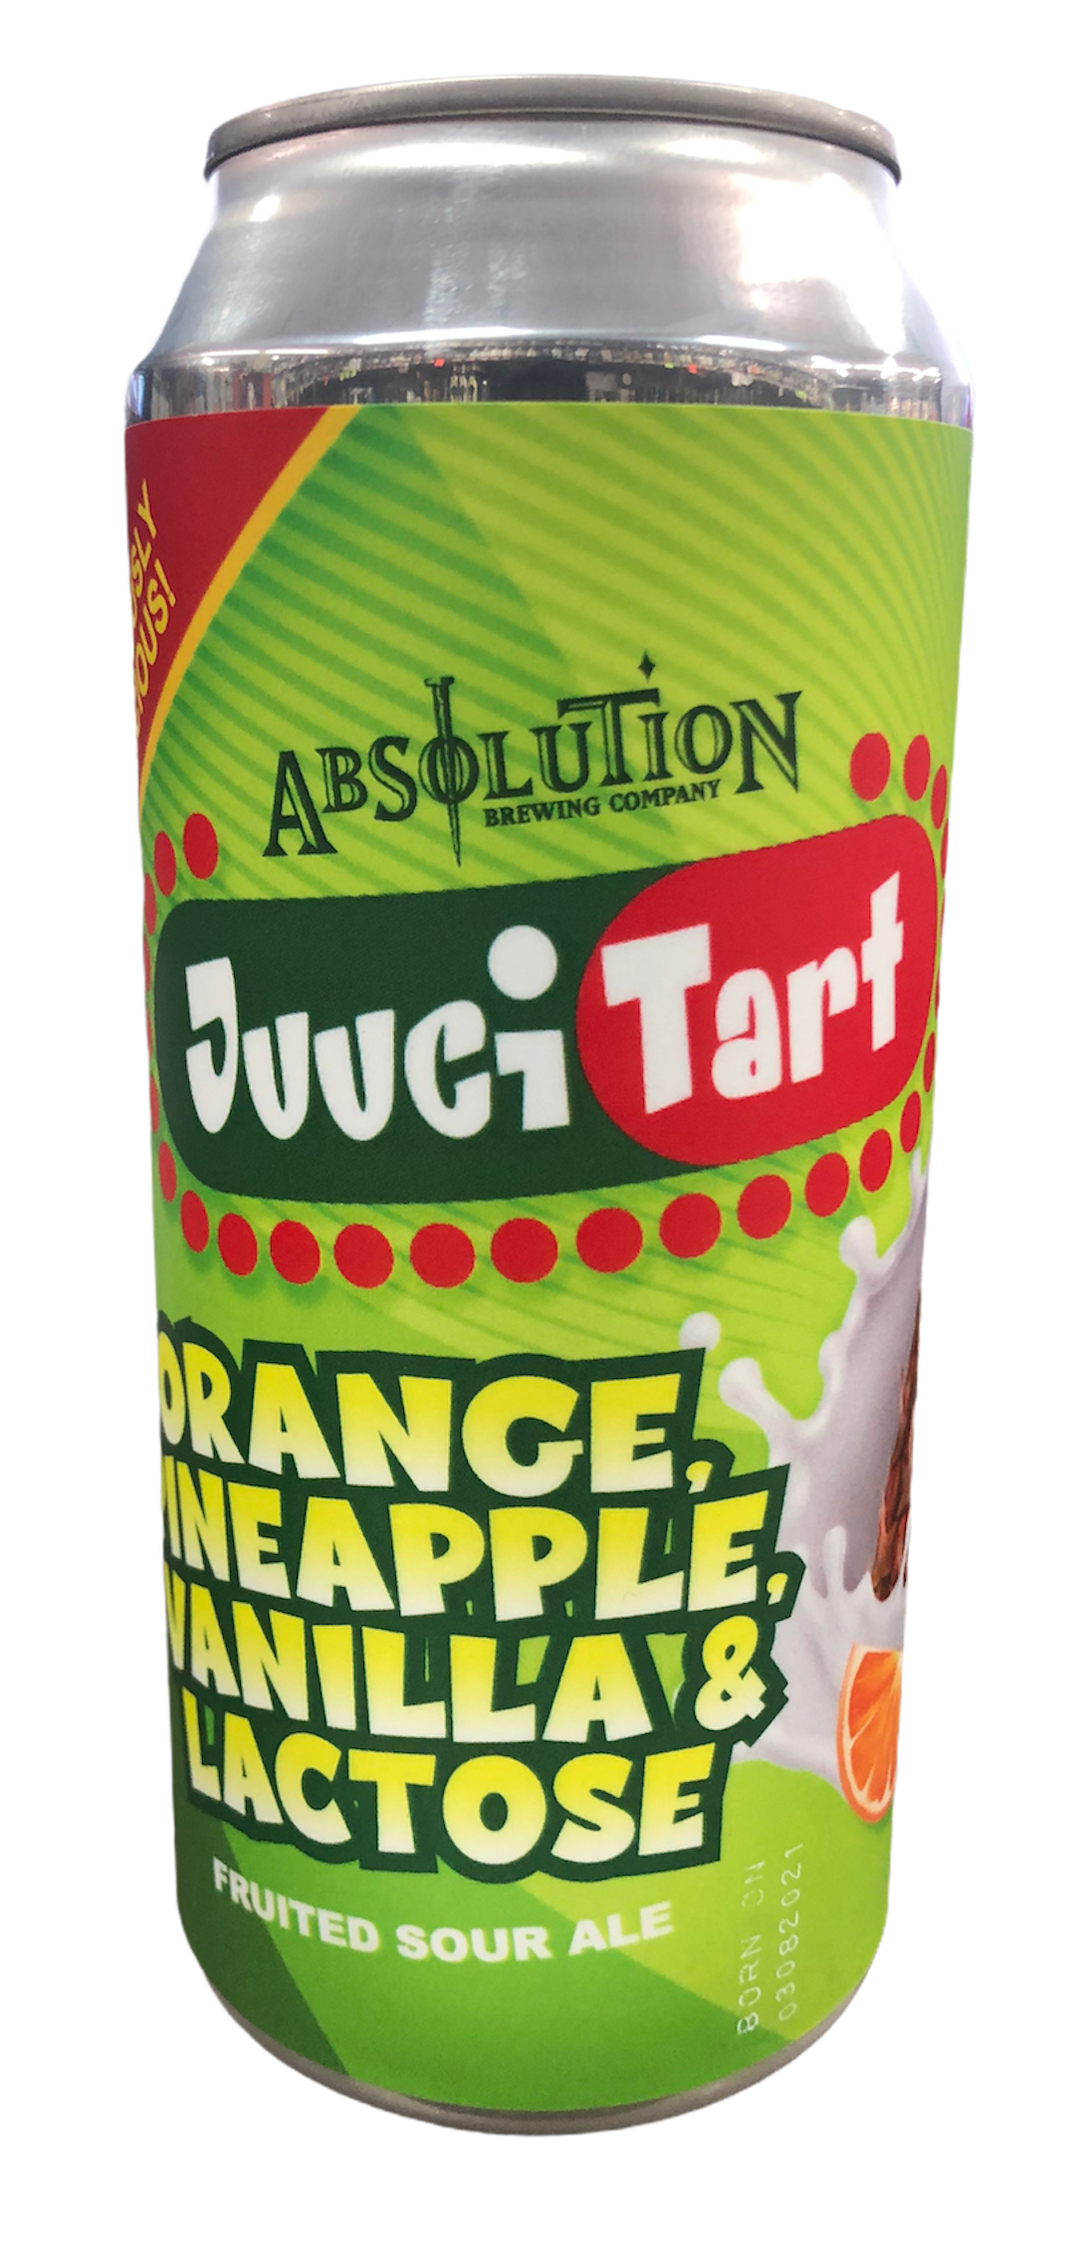 Buy Absolution Jucci Tart Orange, Pineapple, Vanilla & Lactose Online -Craft City